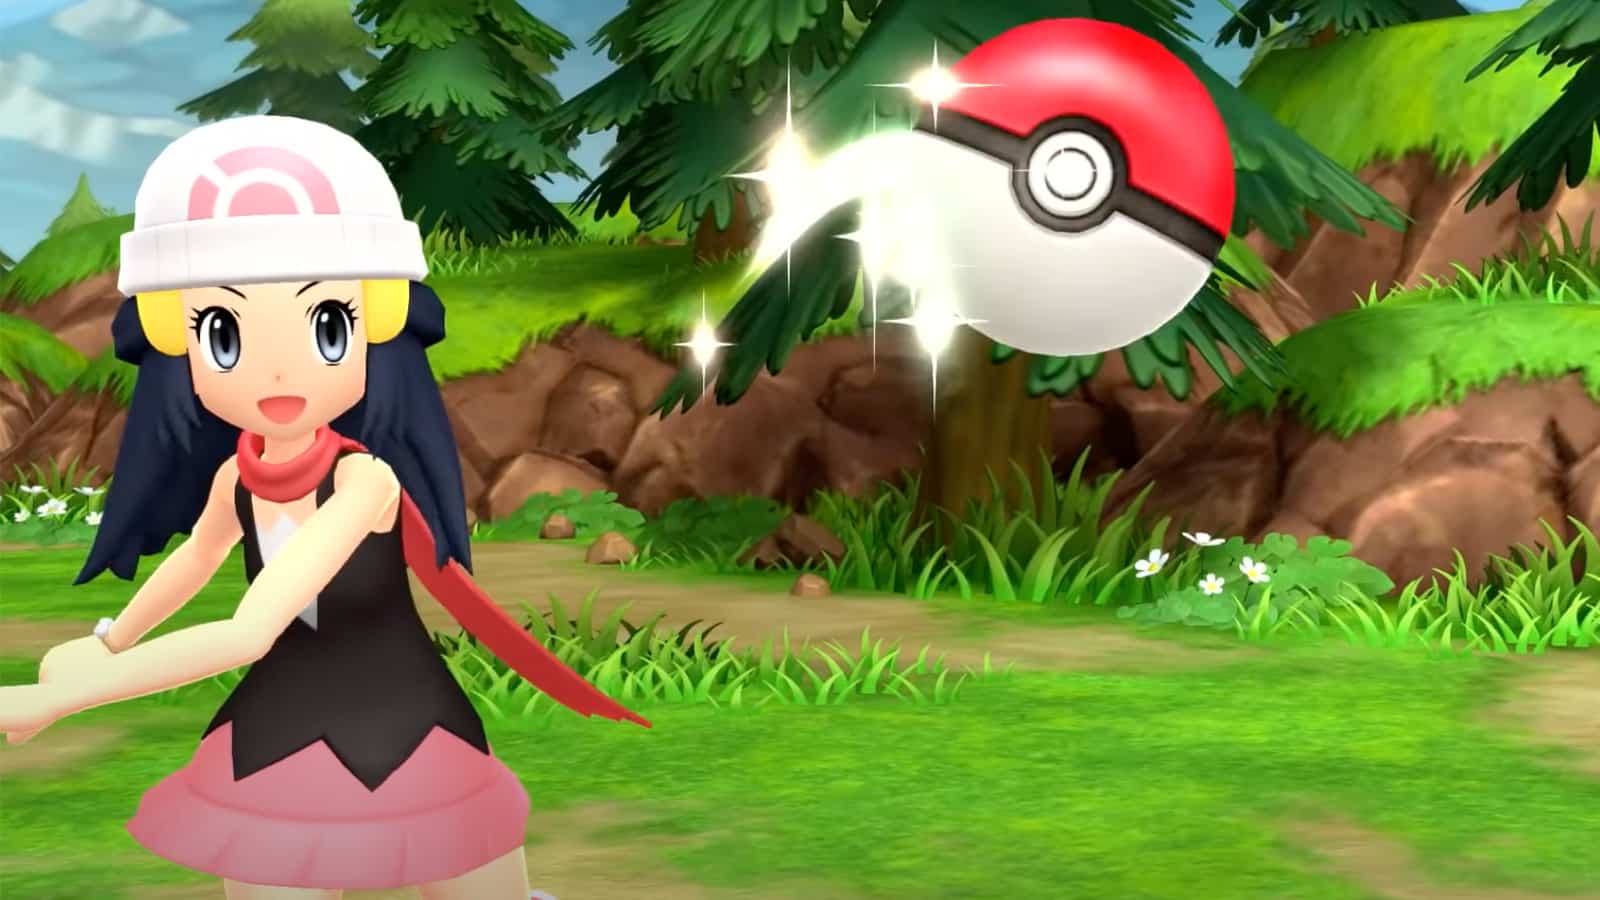 Pokemon Brilliant Diamond and Shining Pearl update 1.1.0 revealed